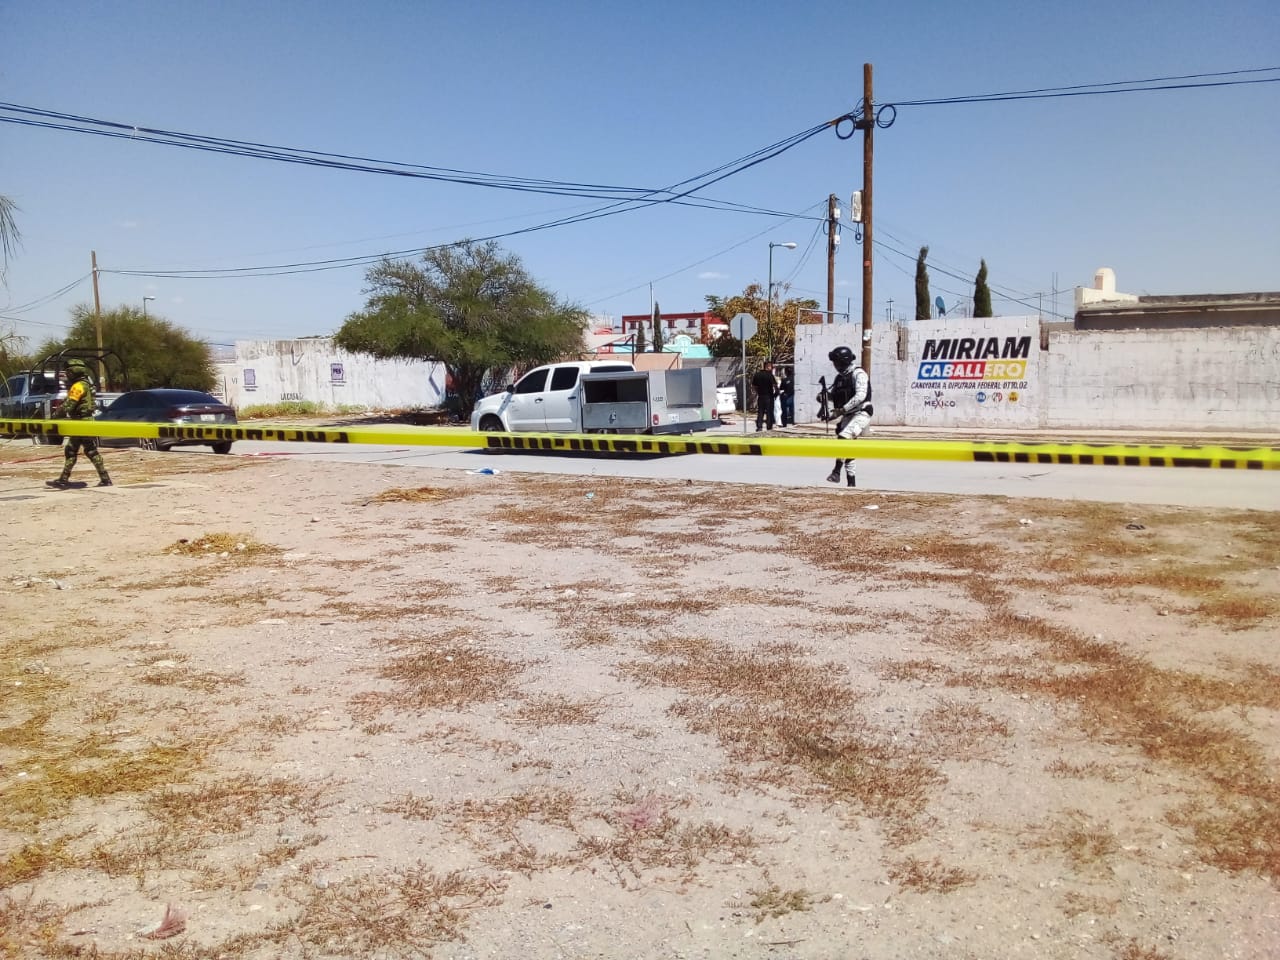 Registra Juárez 105 homicidios en septiembre; alcalde celebra baja de 8 incidentes